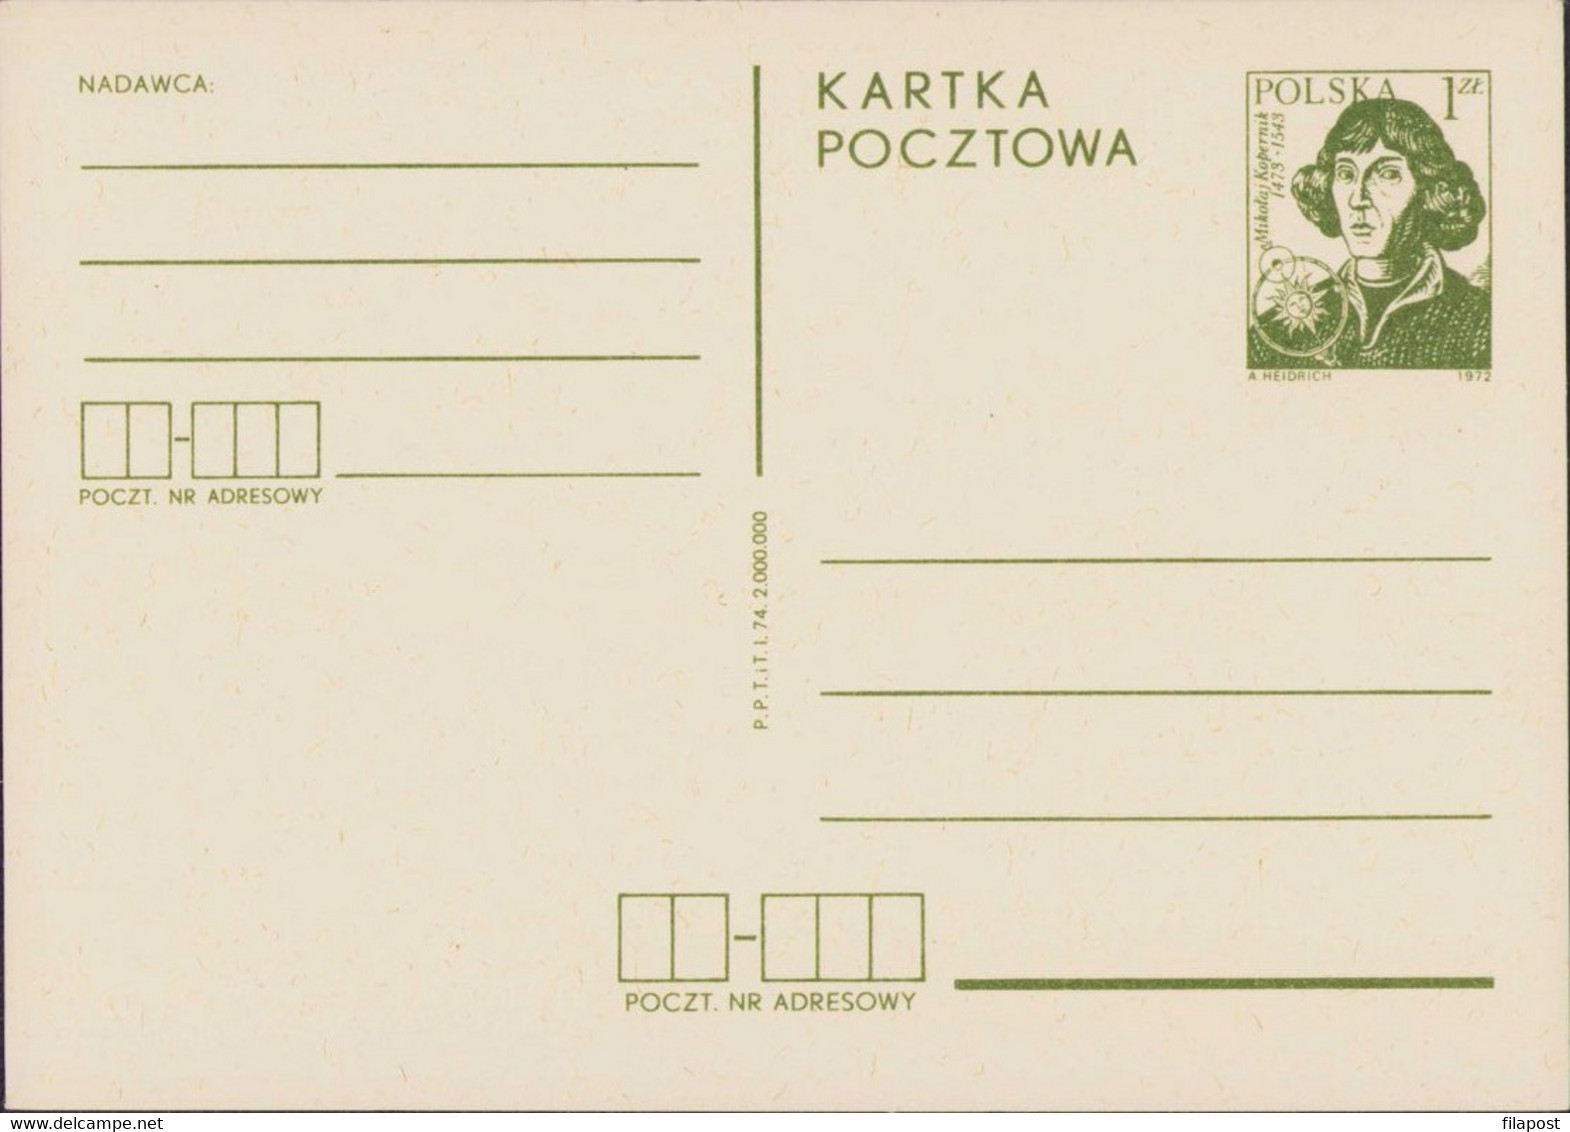 1972 Nicolaus Copernicus Postcard, Postal Stationery, Astronomer, Astronomy, Science - Astronomie